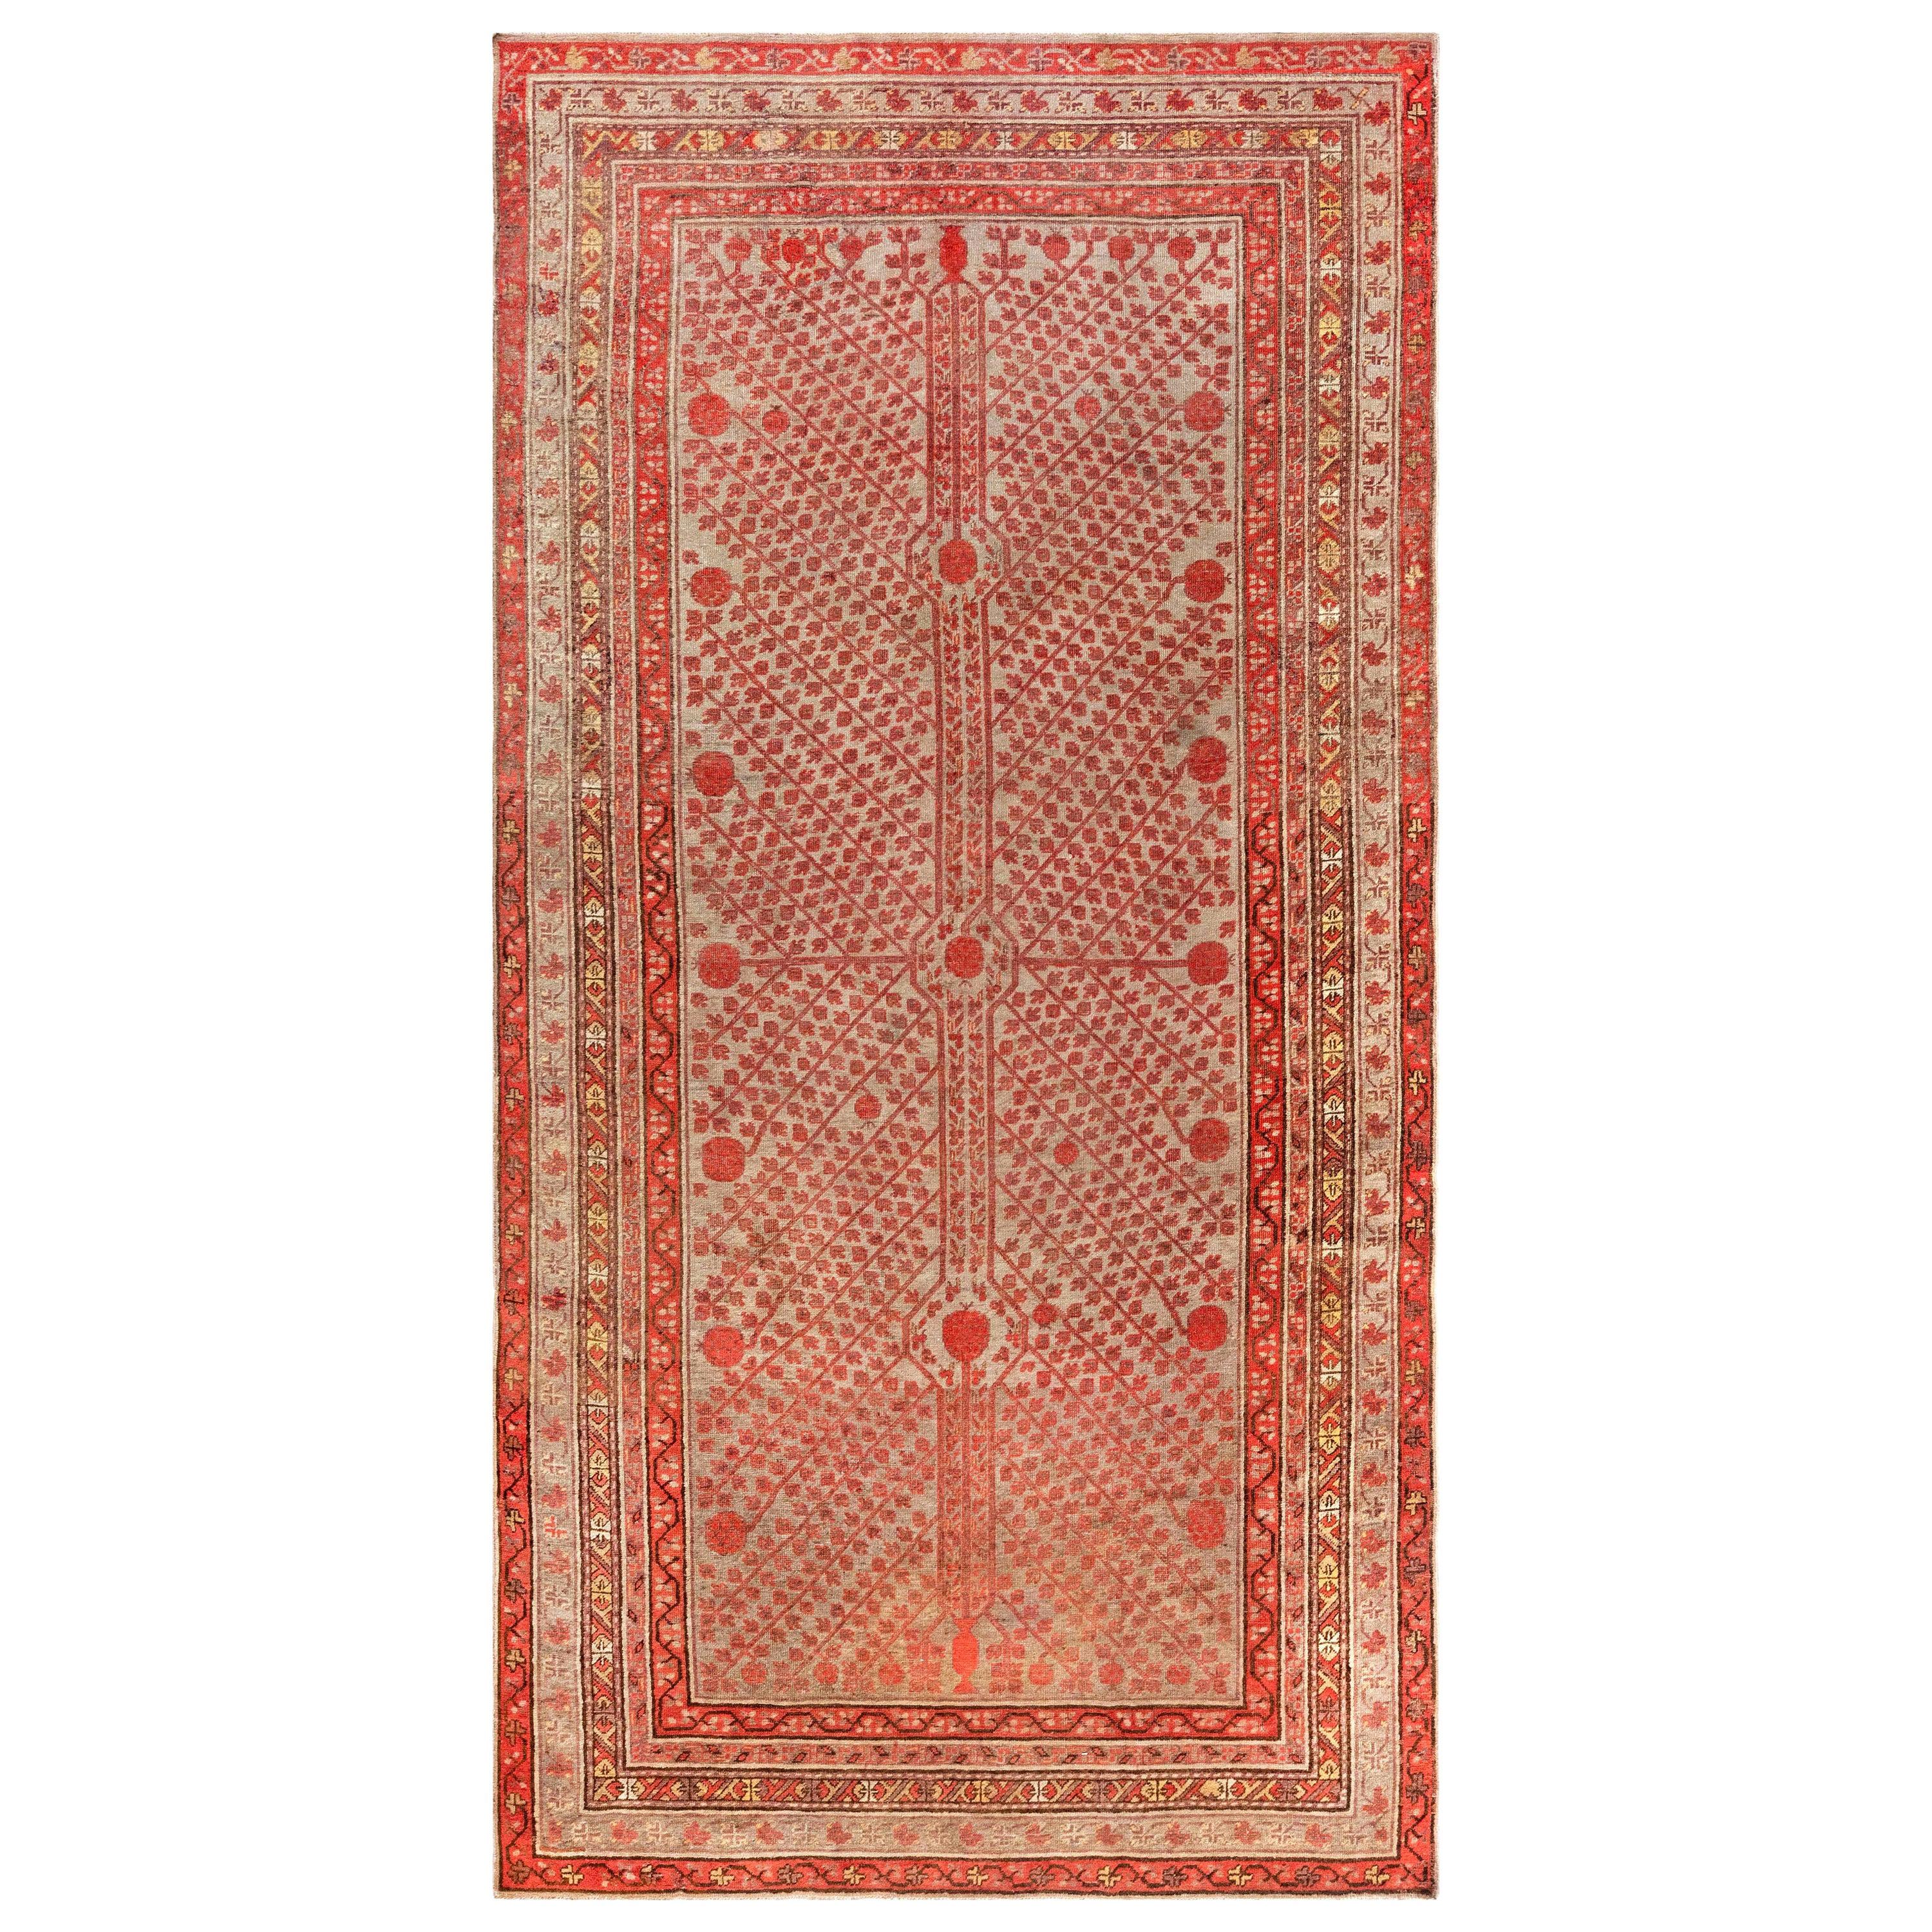 Midcentury Samarkand Handmade Wool Rug in Beige, Red and Orange